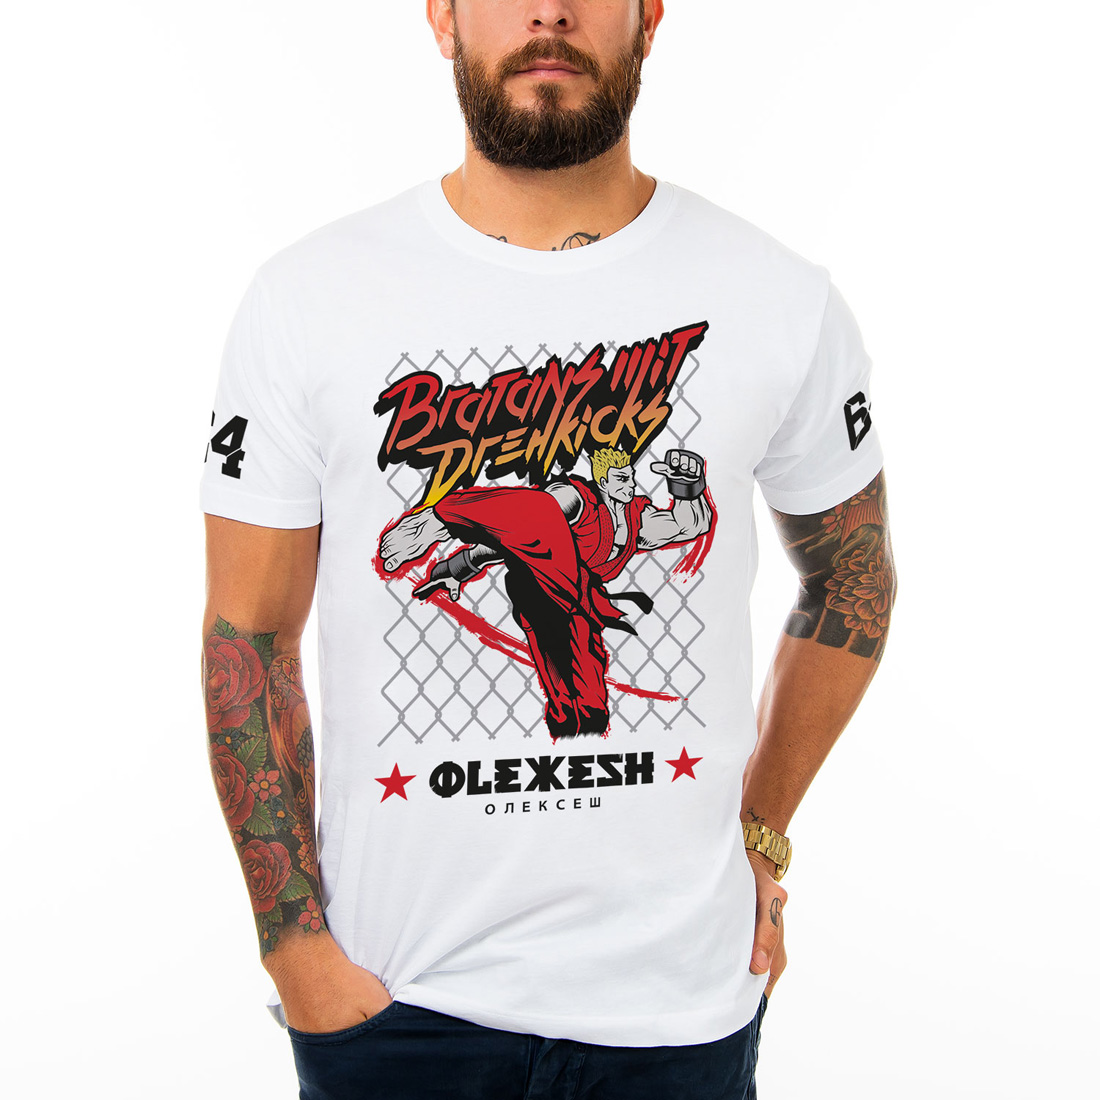 Bravado - Streetfighter - Olexesh - T-Shirt